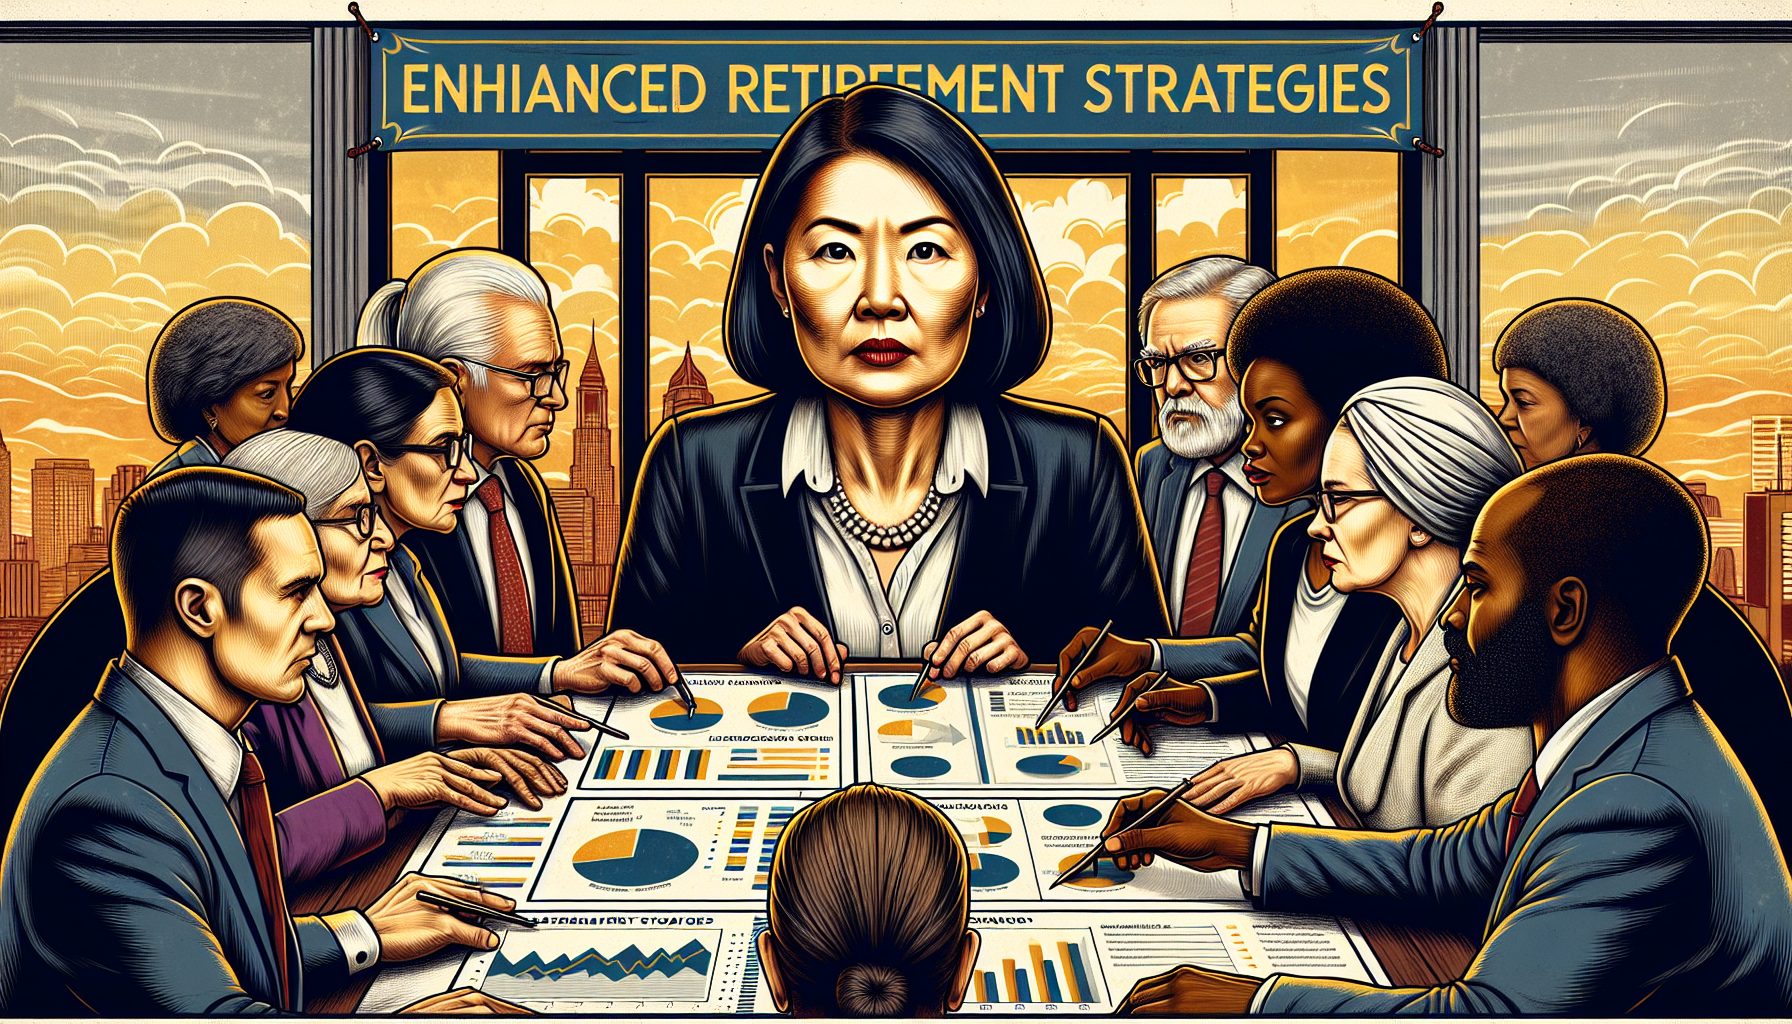 "Enhanced Retirement"